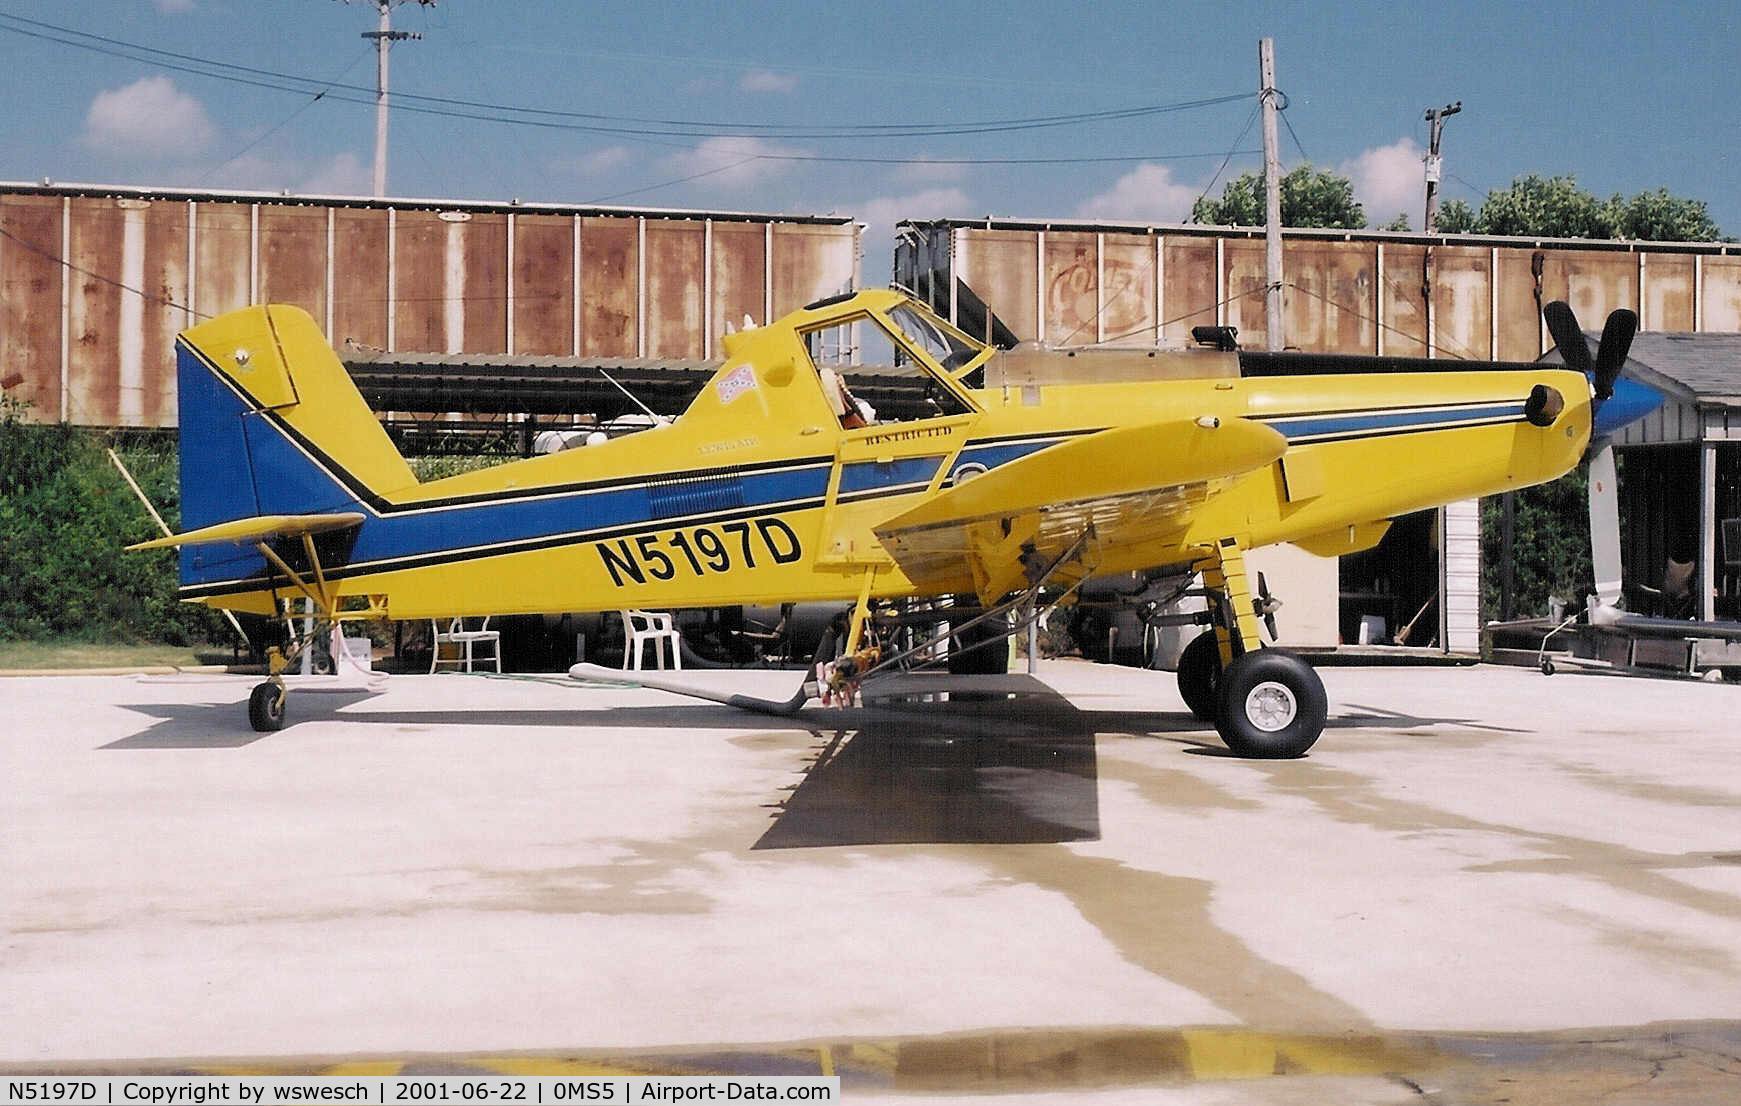 N5197D, Air Tractor Inc AT-502B C/N 502B-0539, 1999 Air tractor AT-502B, #502B-0539.  Lewis Air Service - Leland, Mississippi.